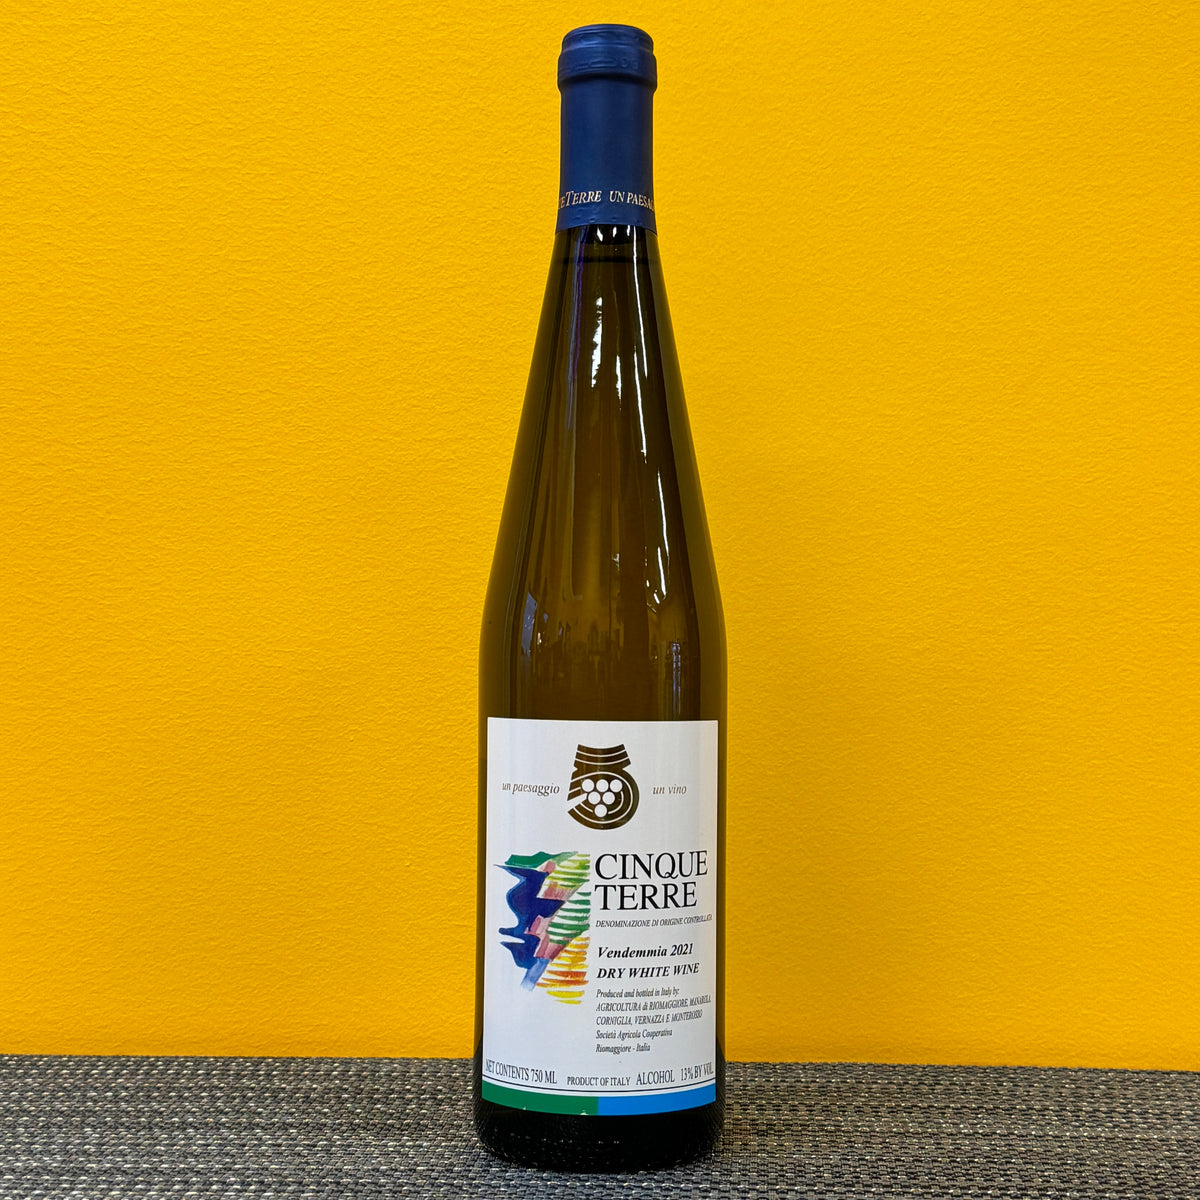 A bottle of Cinque Terre white wine